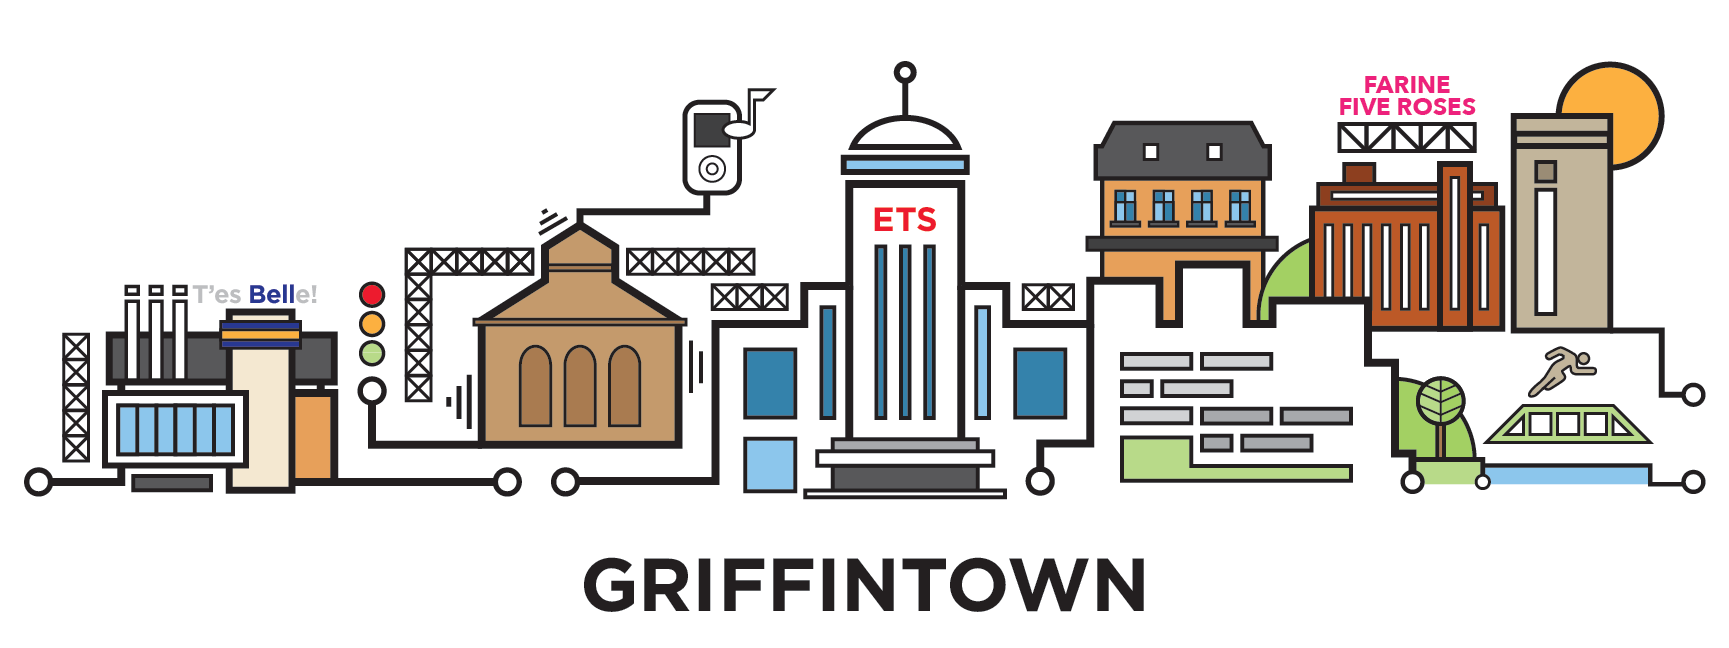 mtl-griffintown-cityline-illustration-by-loogart